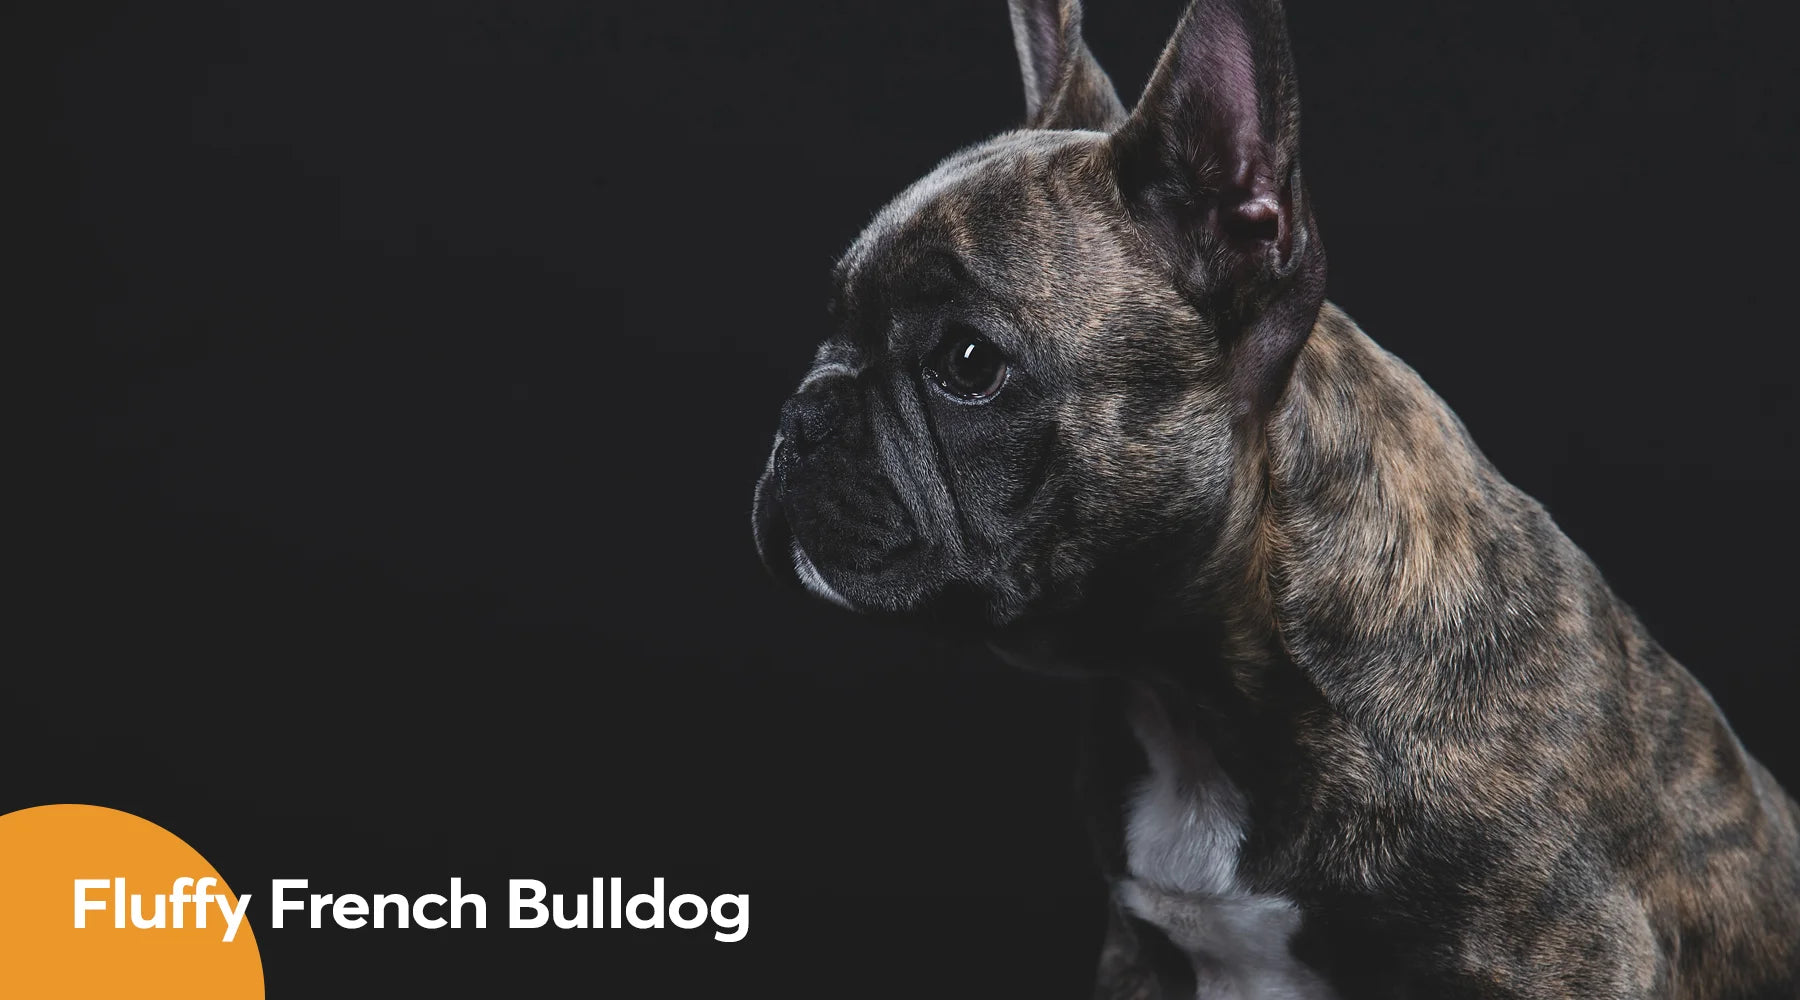 French Bulldog Care: Does My French Bulldog Need a Dog Ramp?